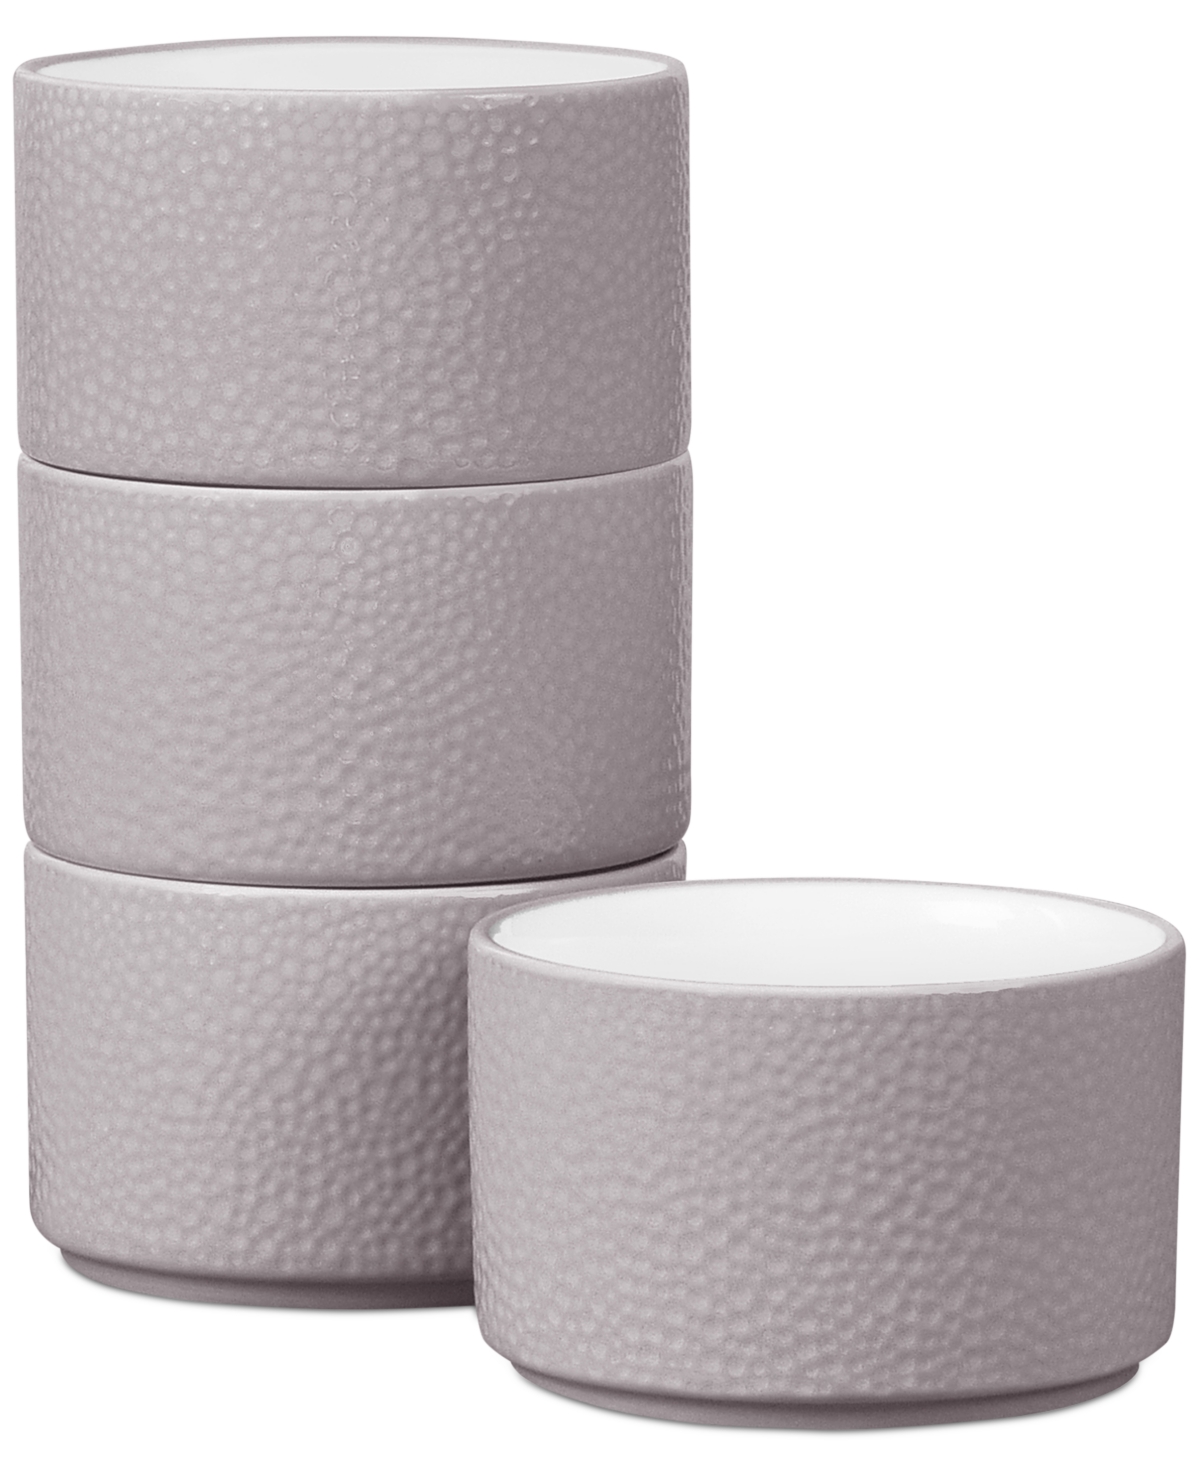 Colortex Stone Stax Mini Bowls, Set of 4 - Aqua